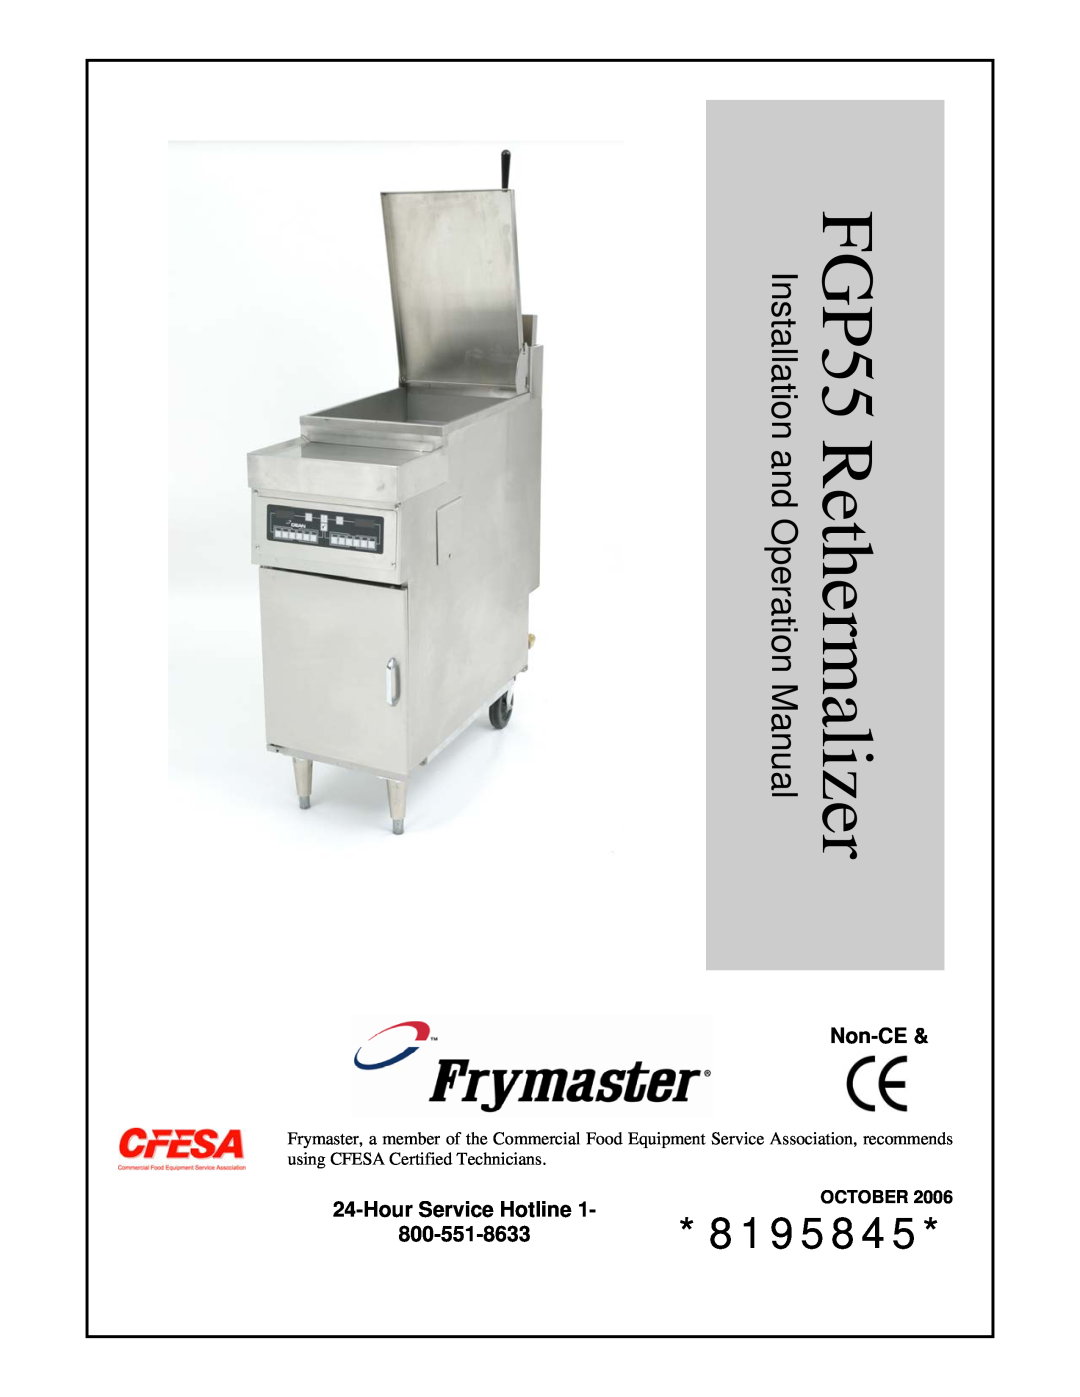 Frymaster operation manual 8195845, Non-CE, HourService Hotline, October, FGP55 Rethermalizer 